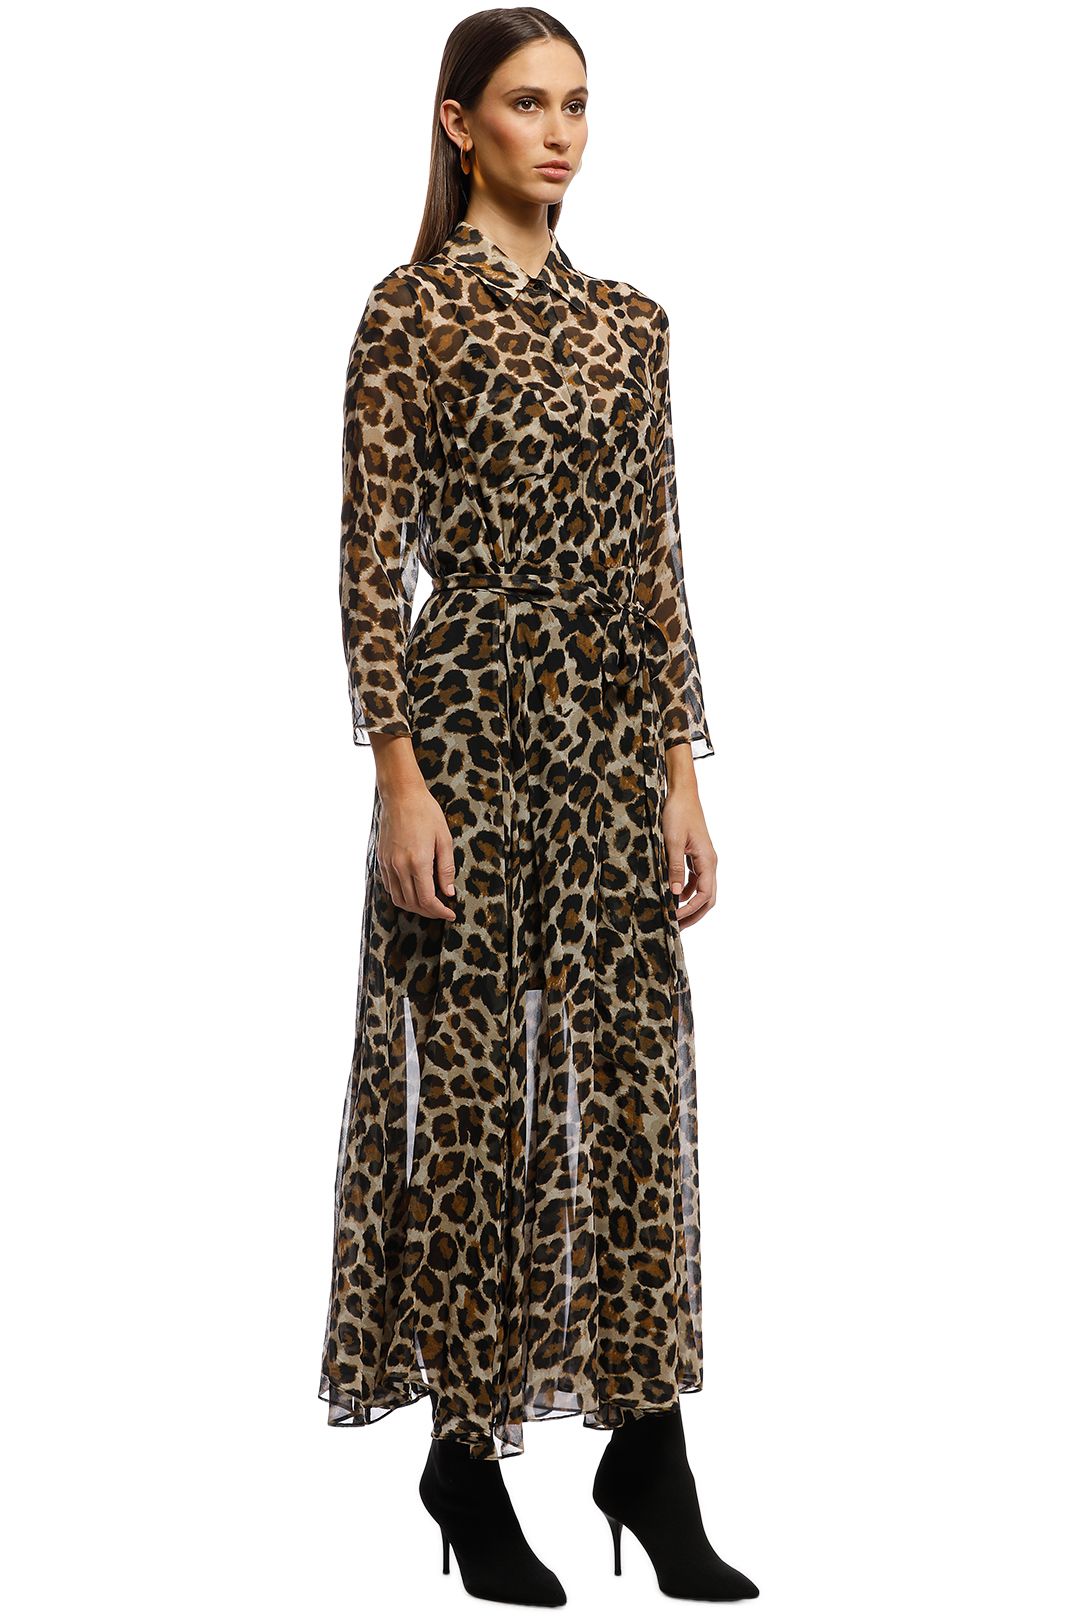 Husk - Aria Dress - Leopard Print - Brown - Side